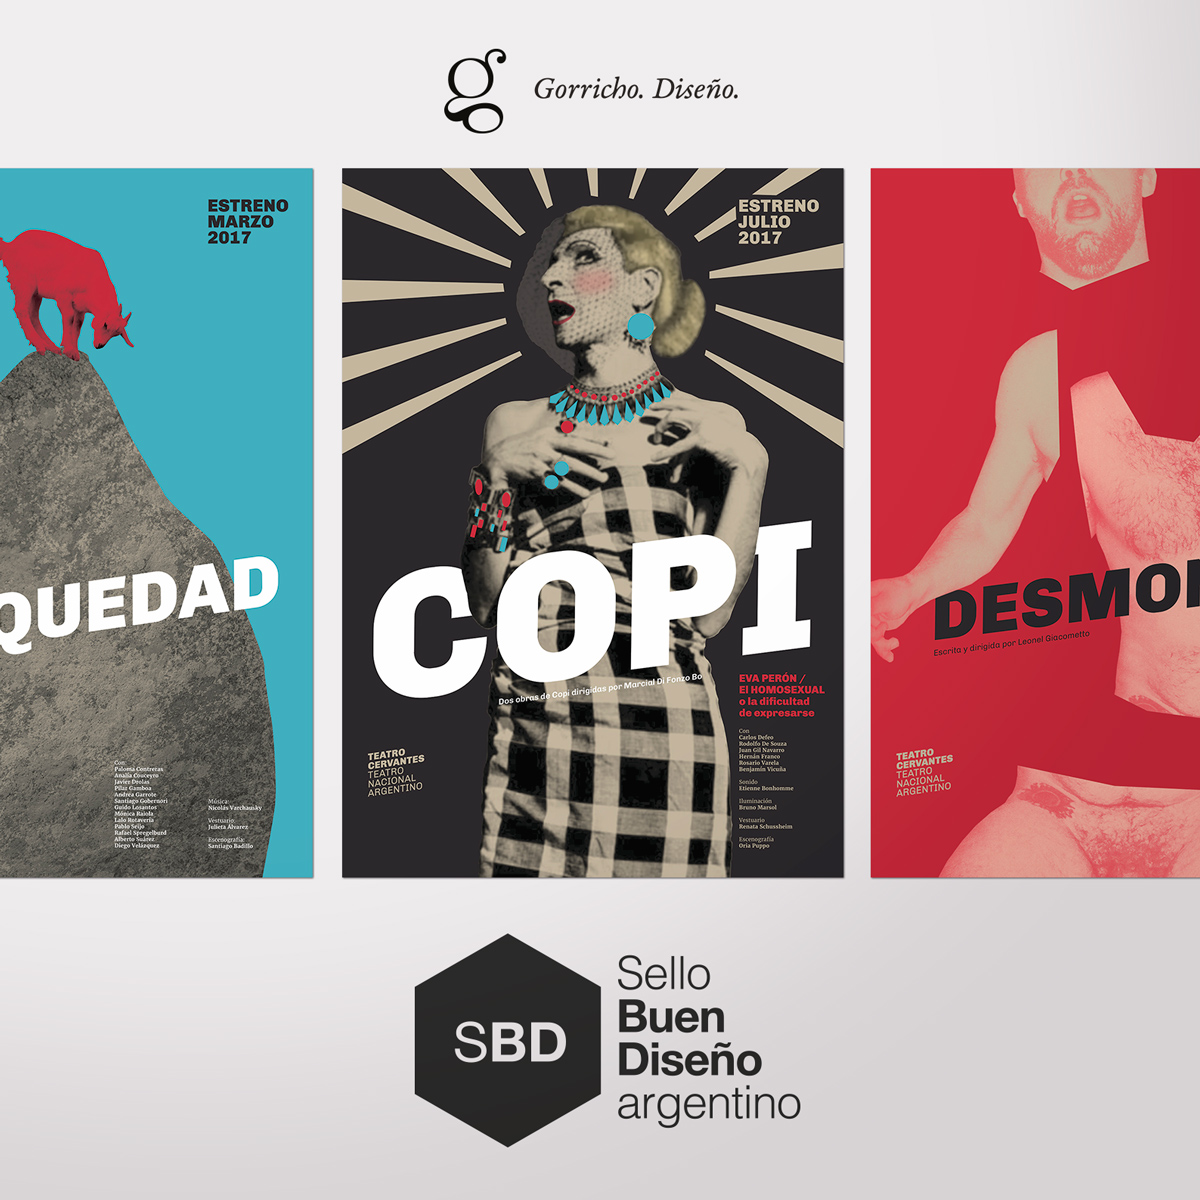 Sello del Buen Diseño argentino - Teatro Nacional Argentino - Gorricho Diseño.